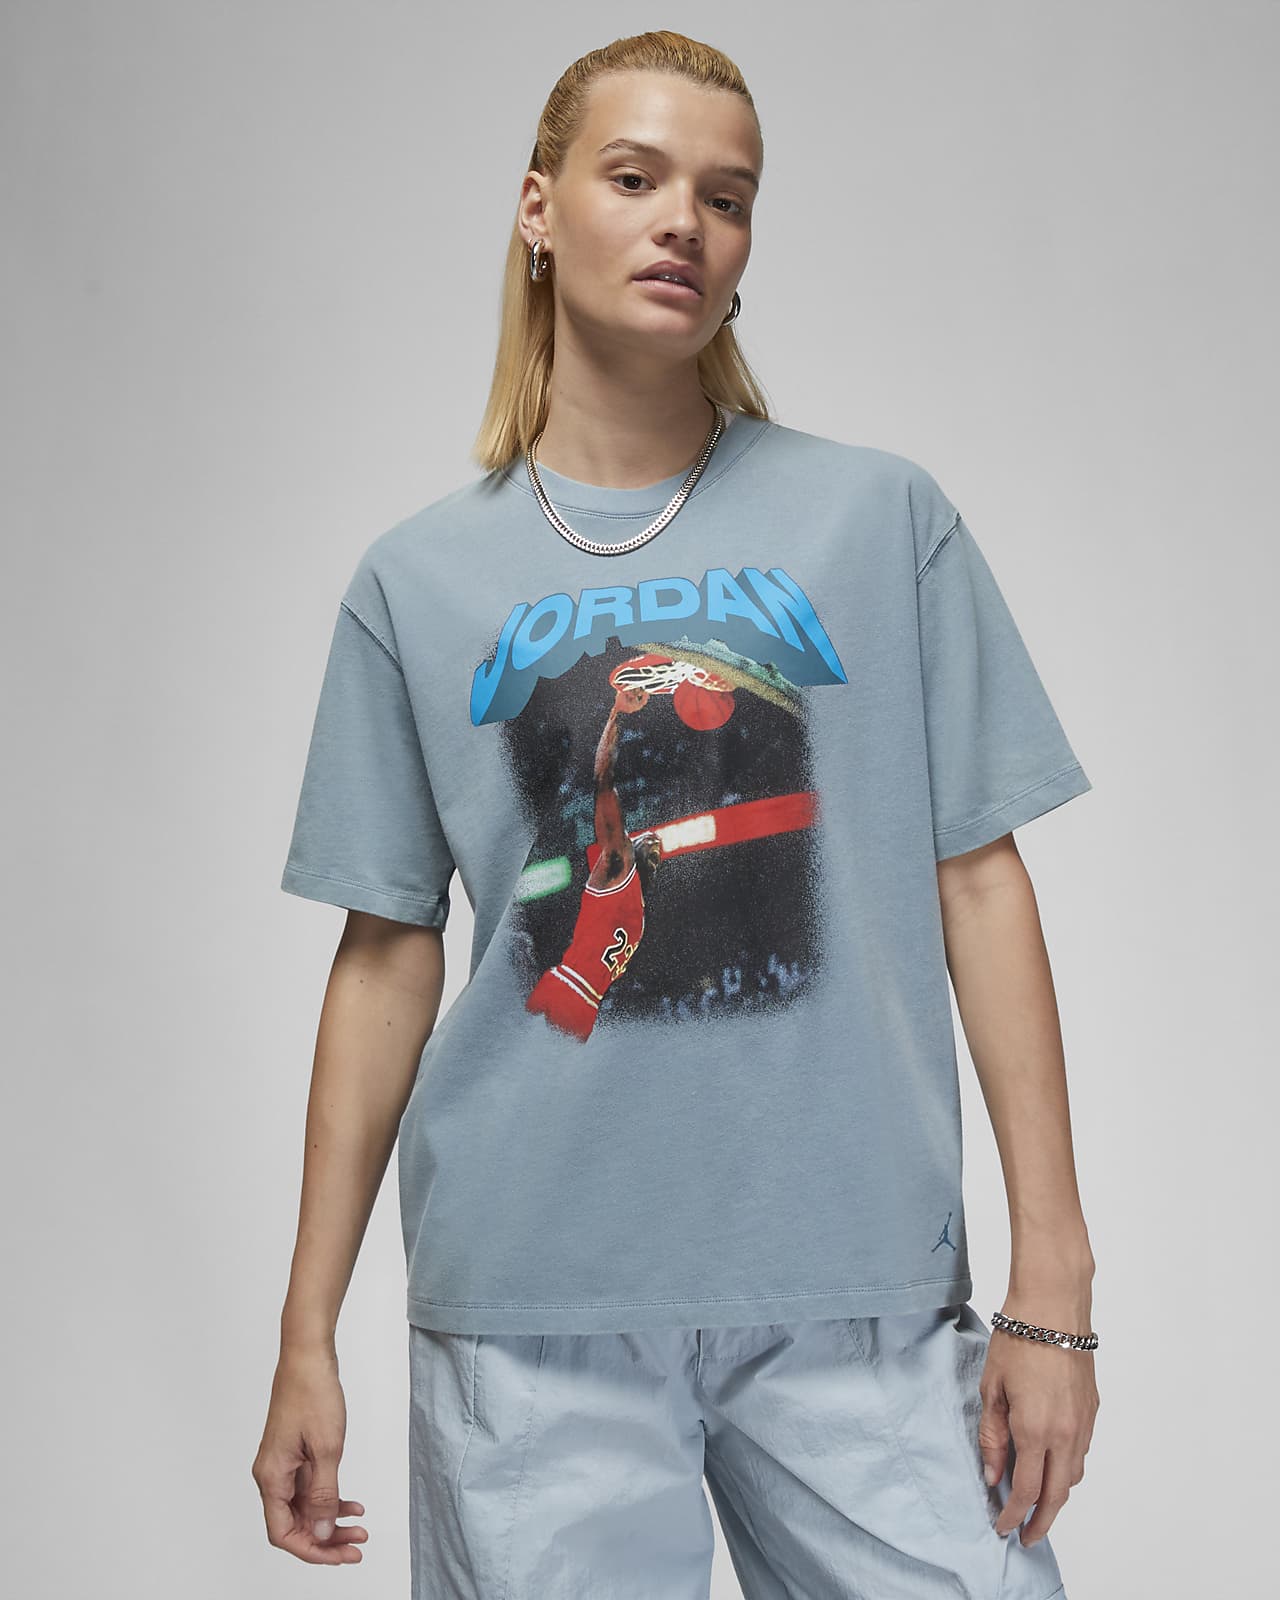 Jordan (Her)itage Women's Graphic T-Shirt